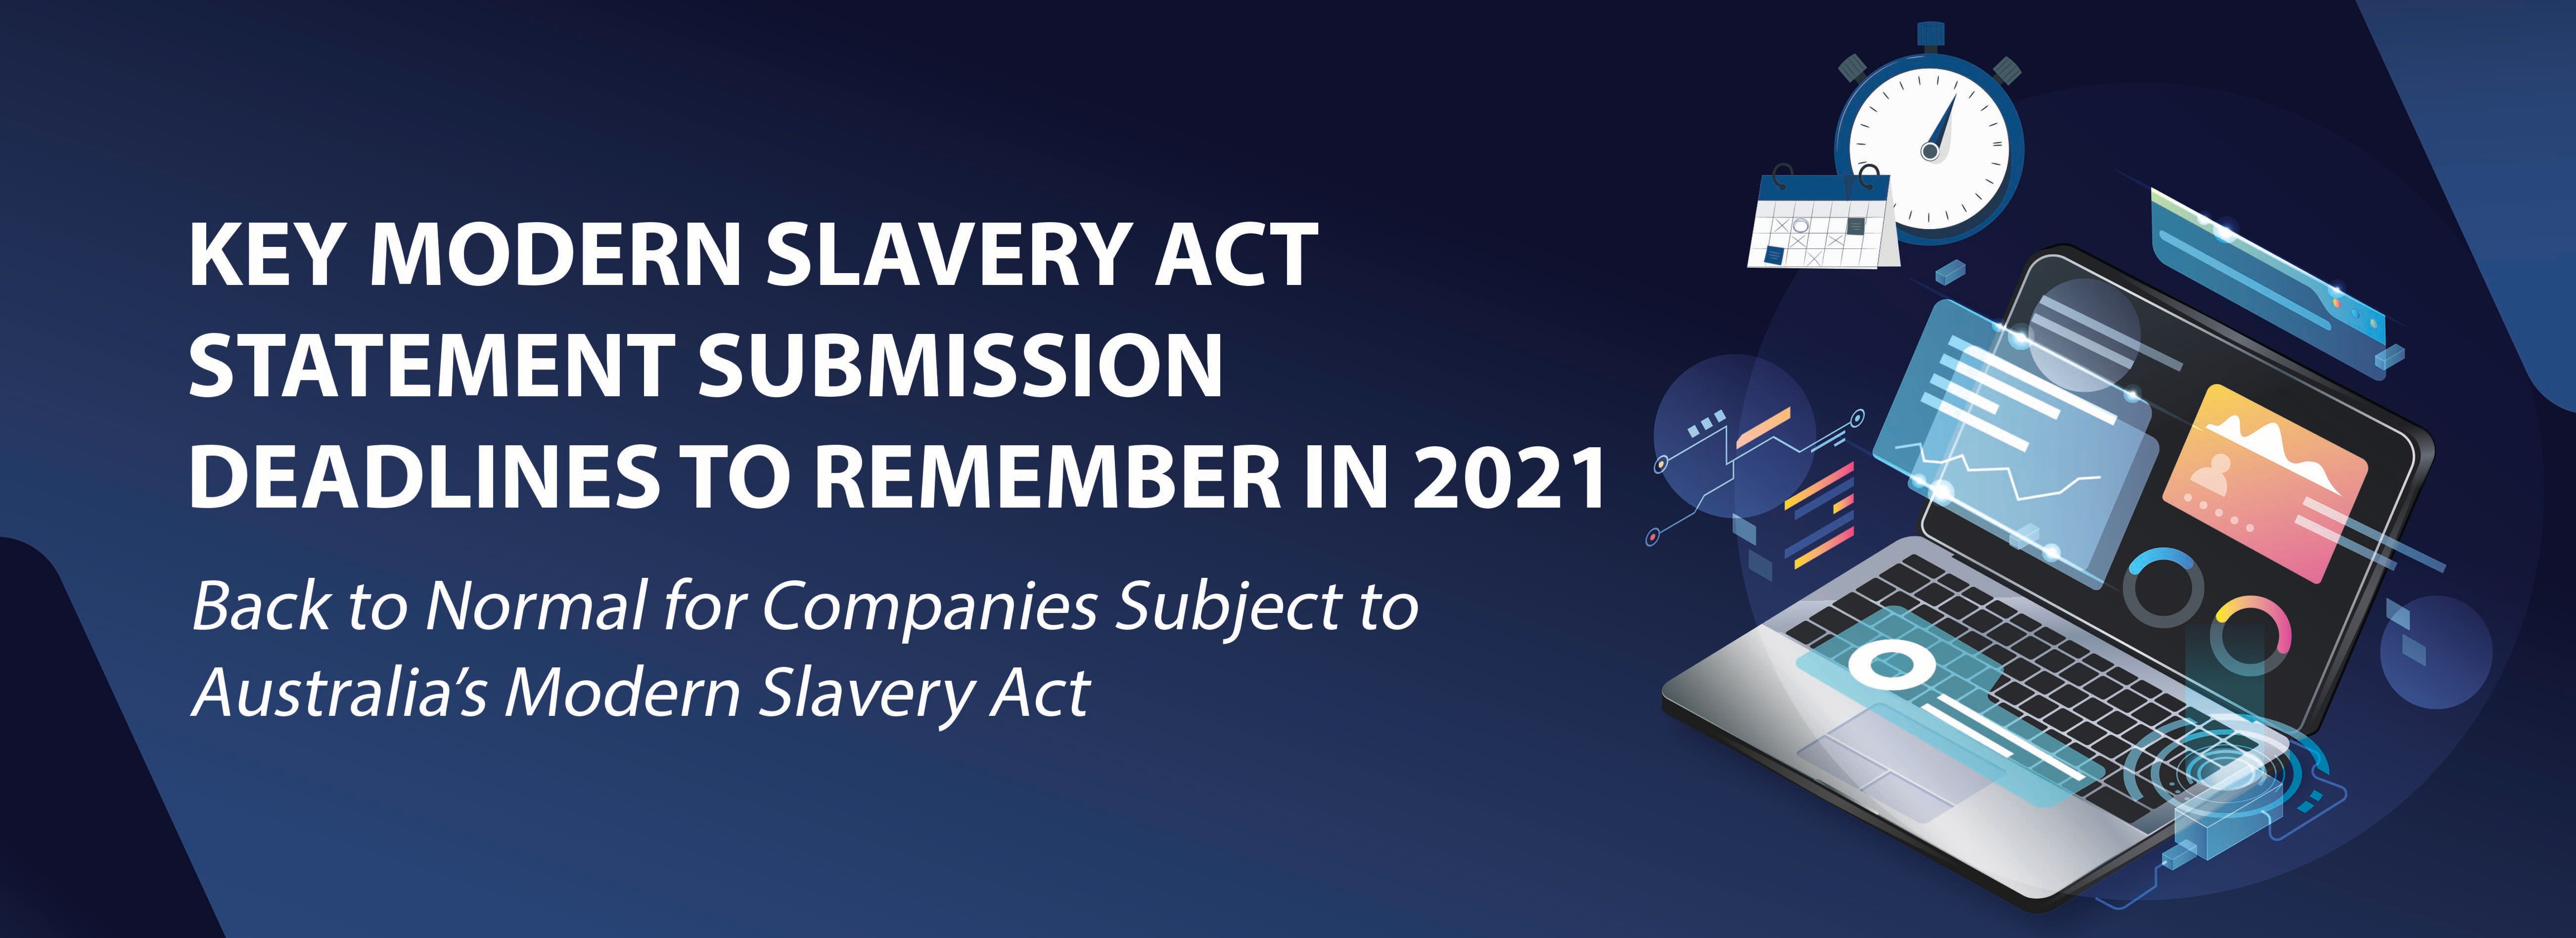 modern slavery act deadlines 2021